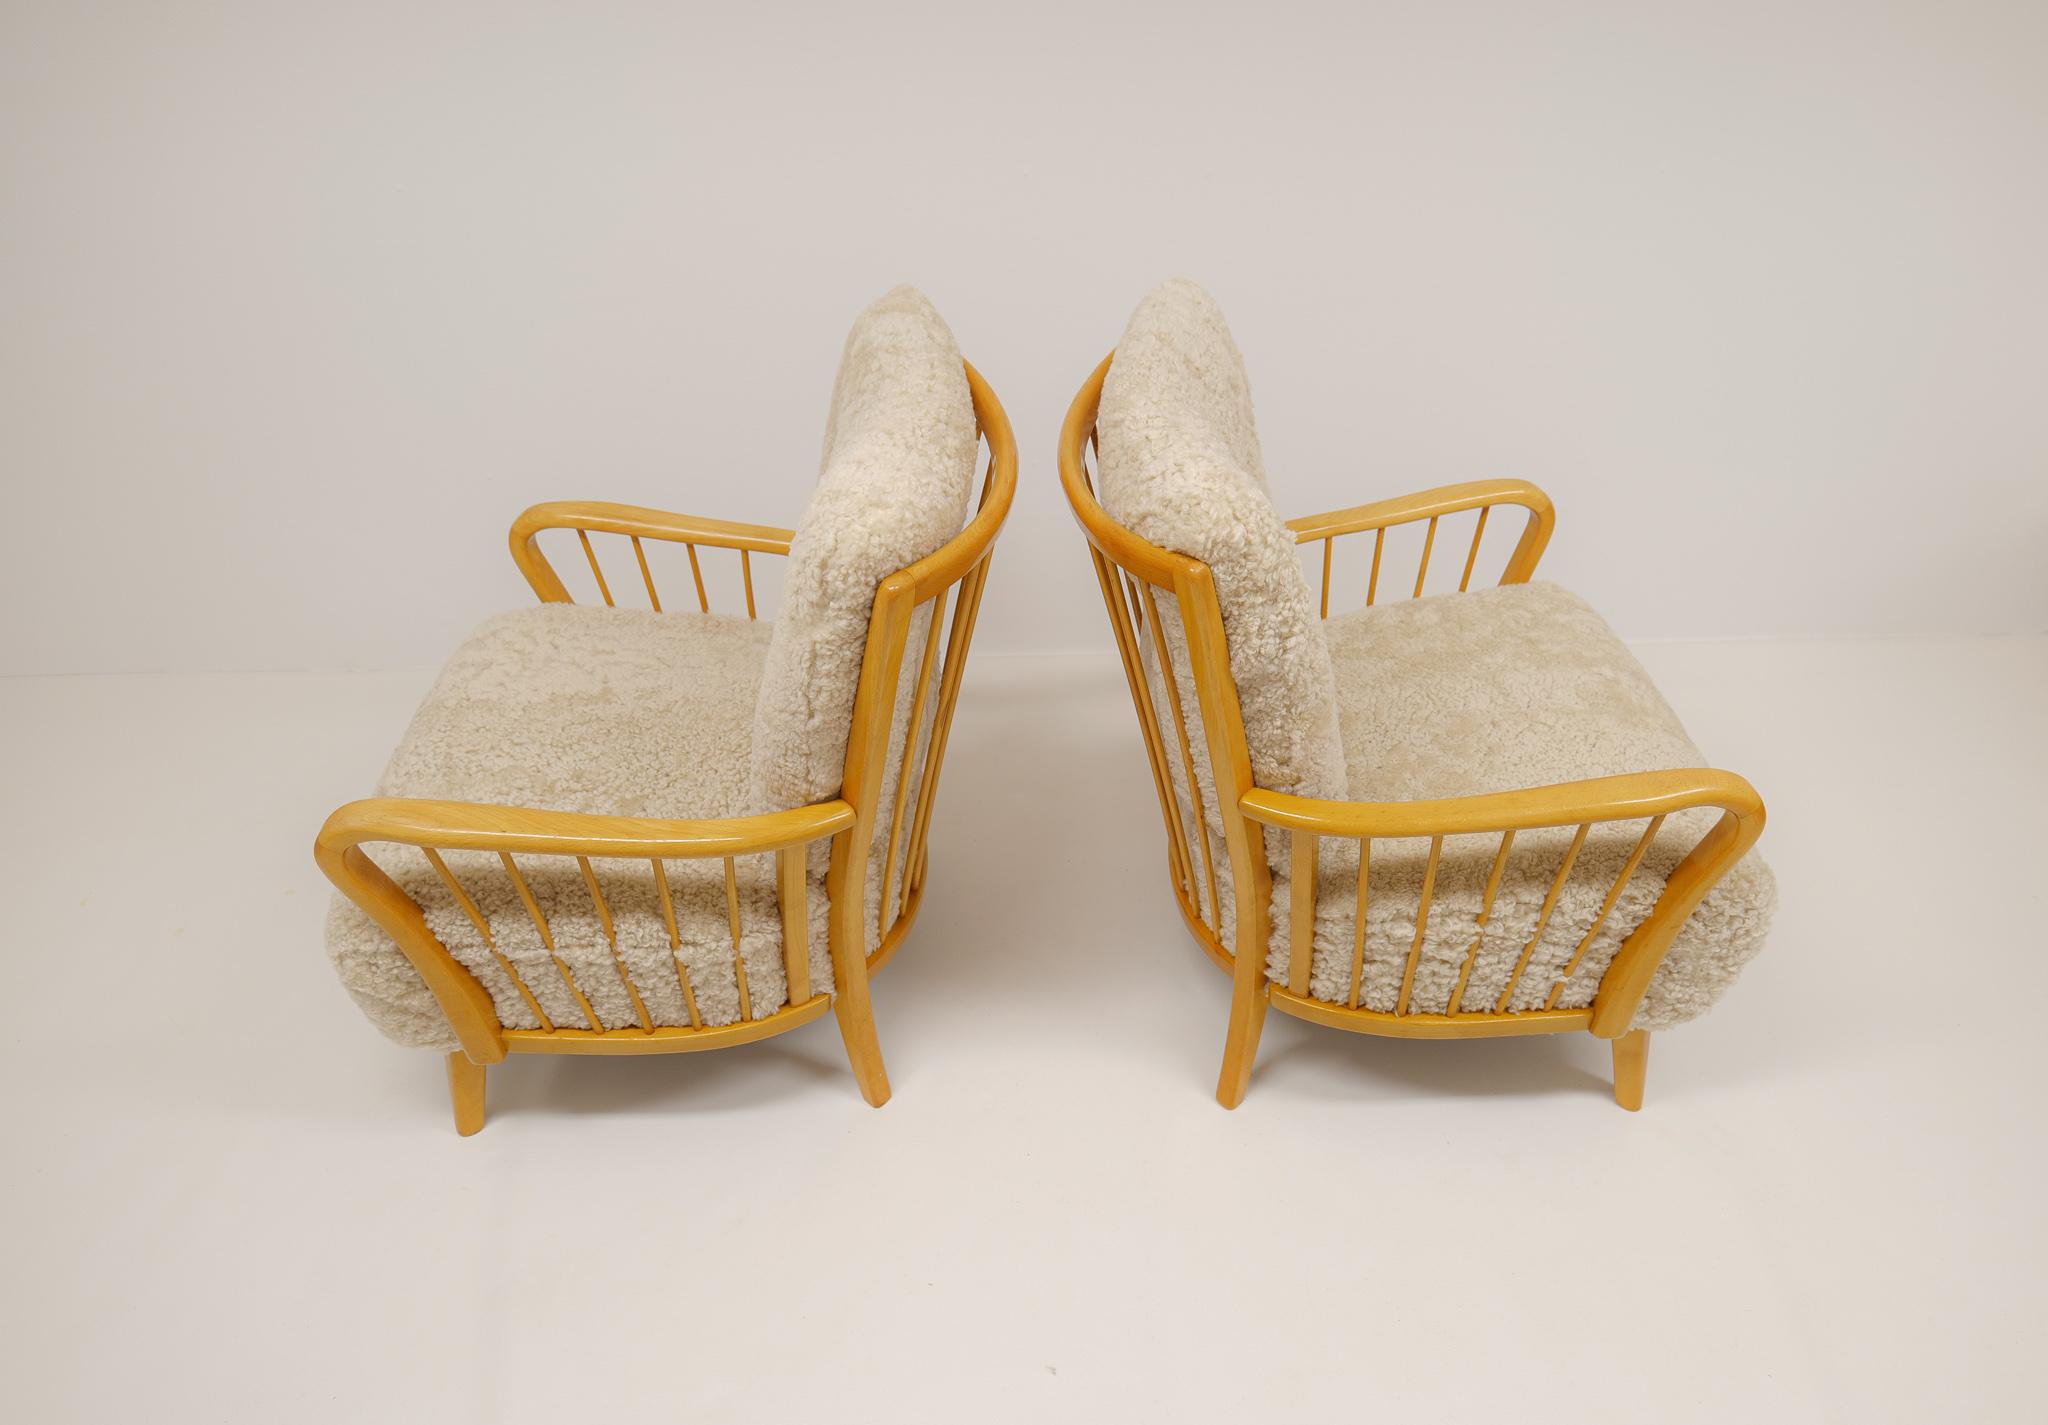 Art Deco Swedish Grace Lounge Chairs in Shearling / Sheepskin 1940s Sweden For Sale 8